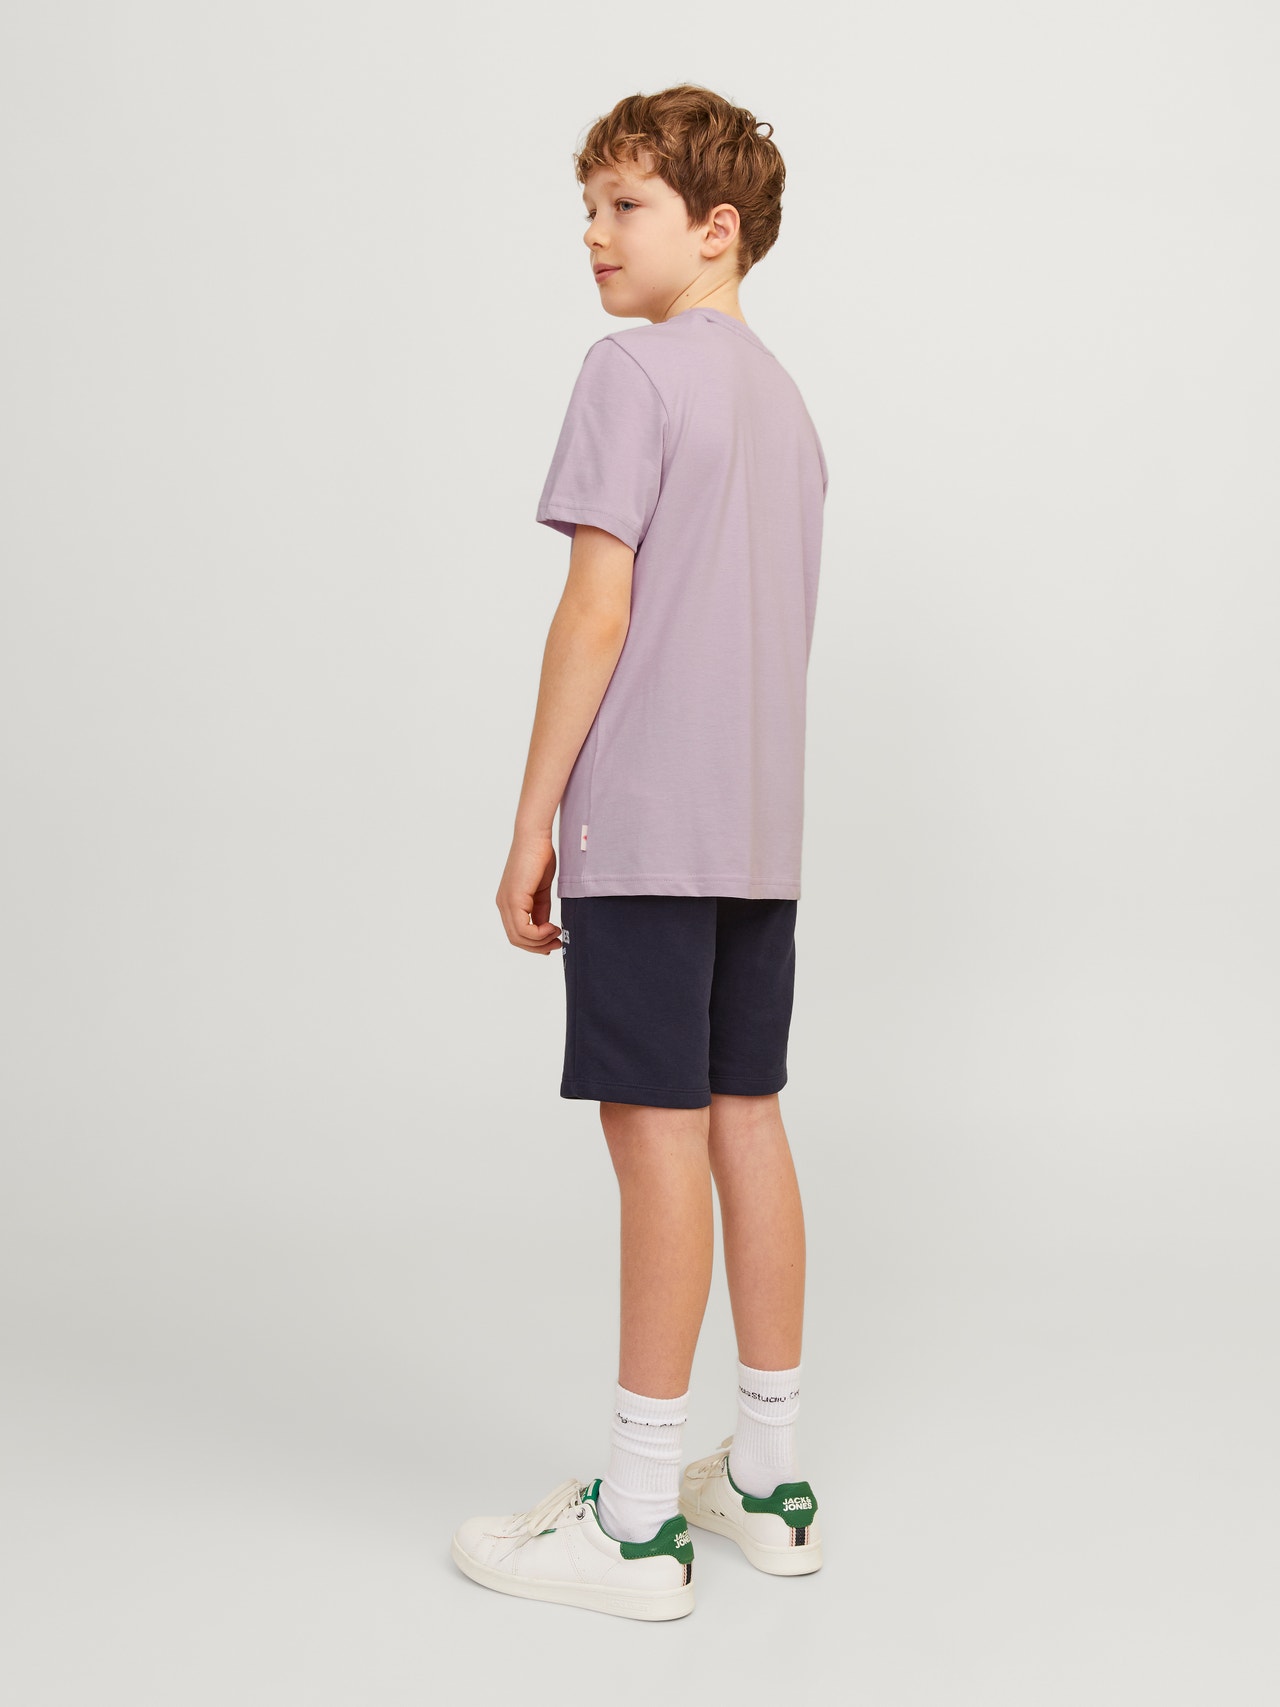 Jack & Jones Printed T-shirt For boys -Lavender Frost - 12257131